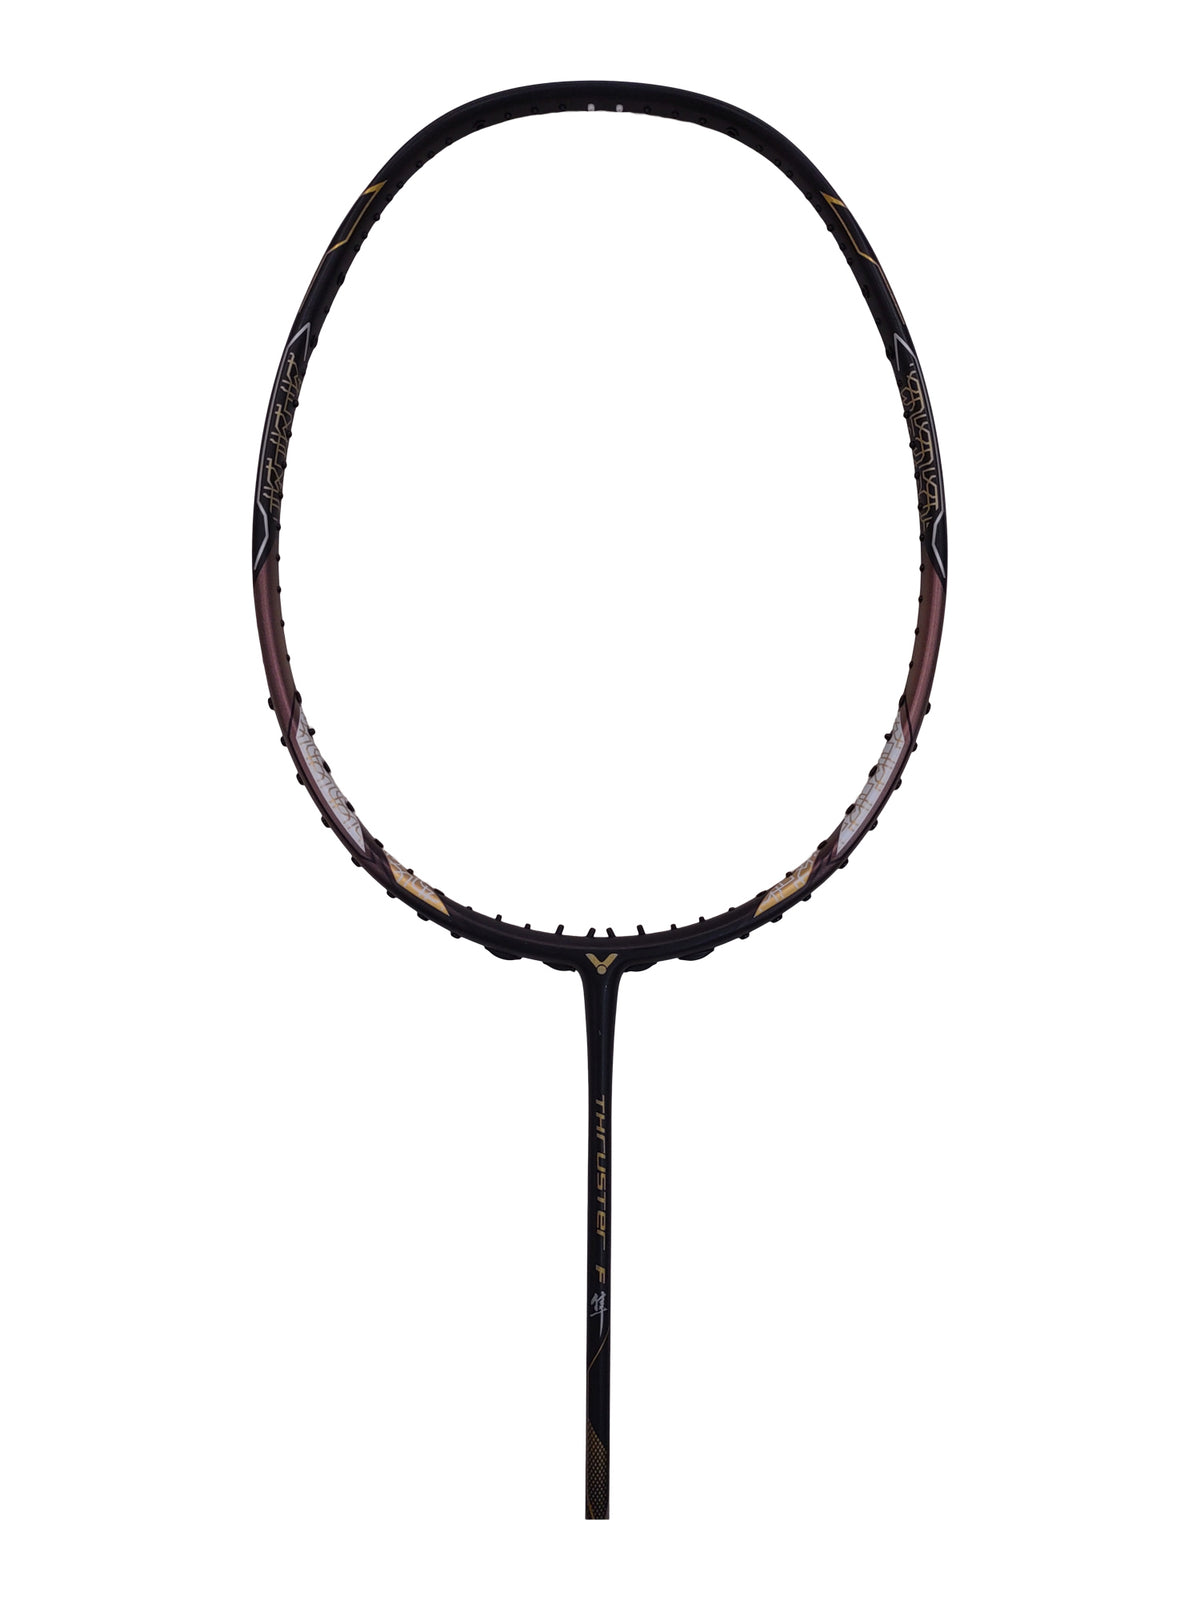 Victor Thruster TK-F Falcon Enhanced Edition Badminton Racket (Black)